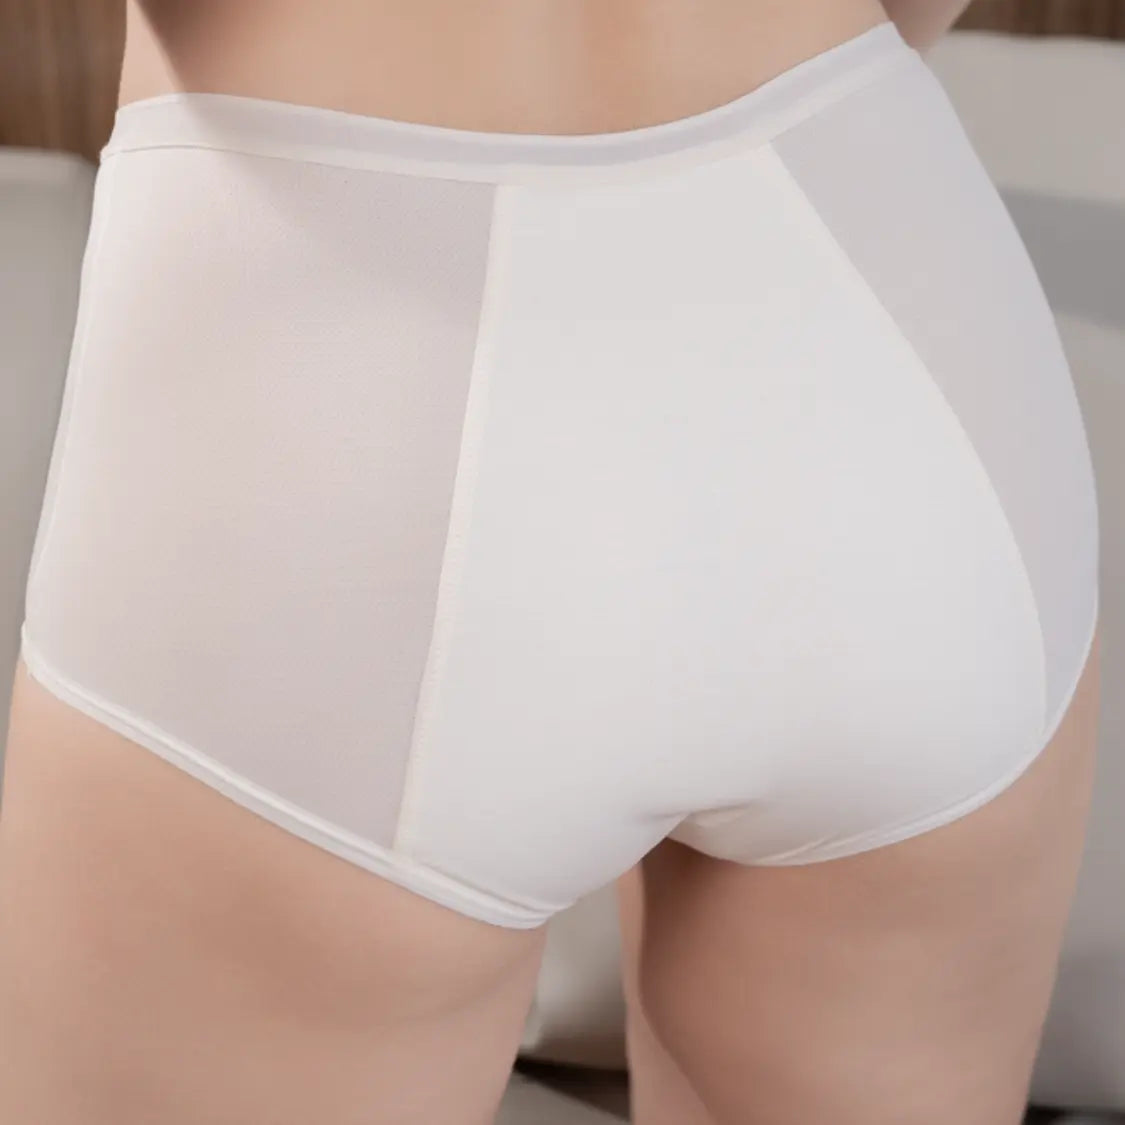 Best Incontinence Underwear for Woman - Leak Proof Ice Silk (White)Underleak